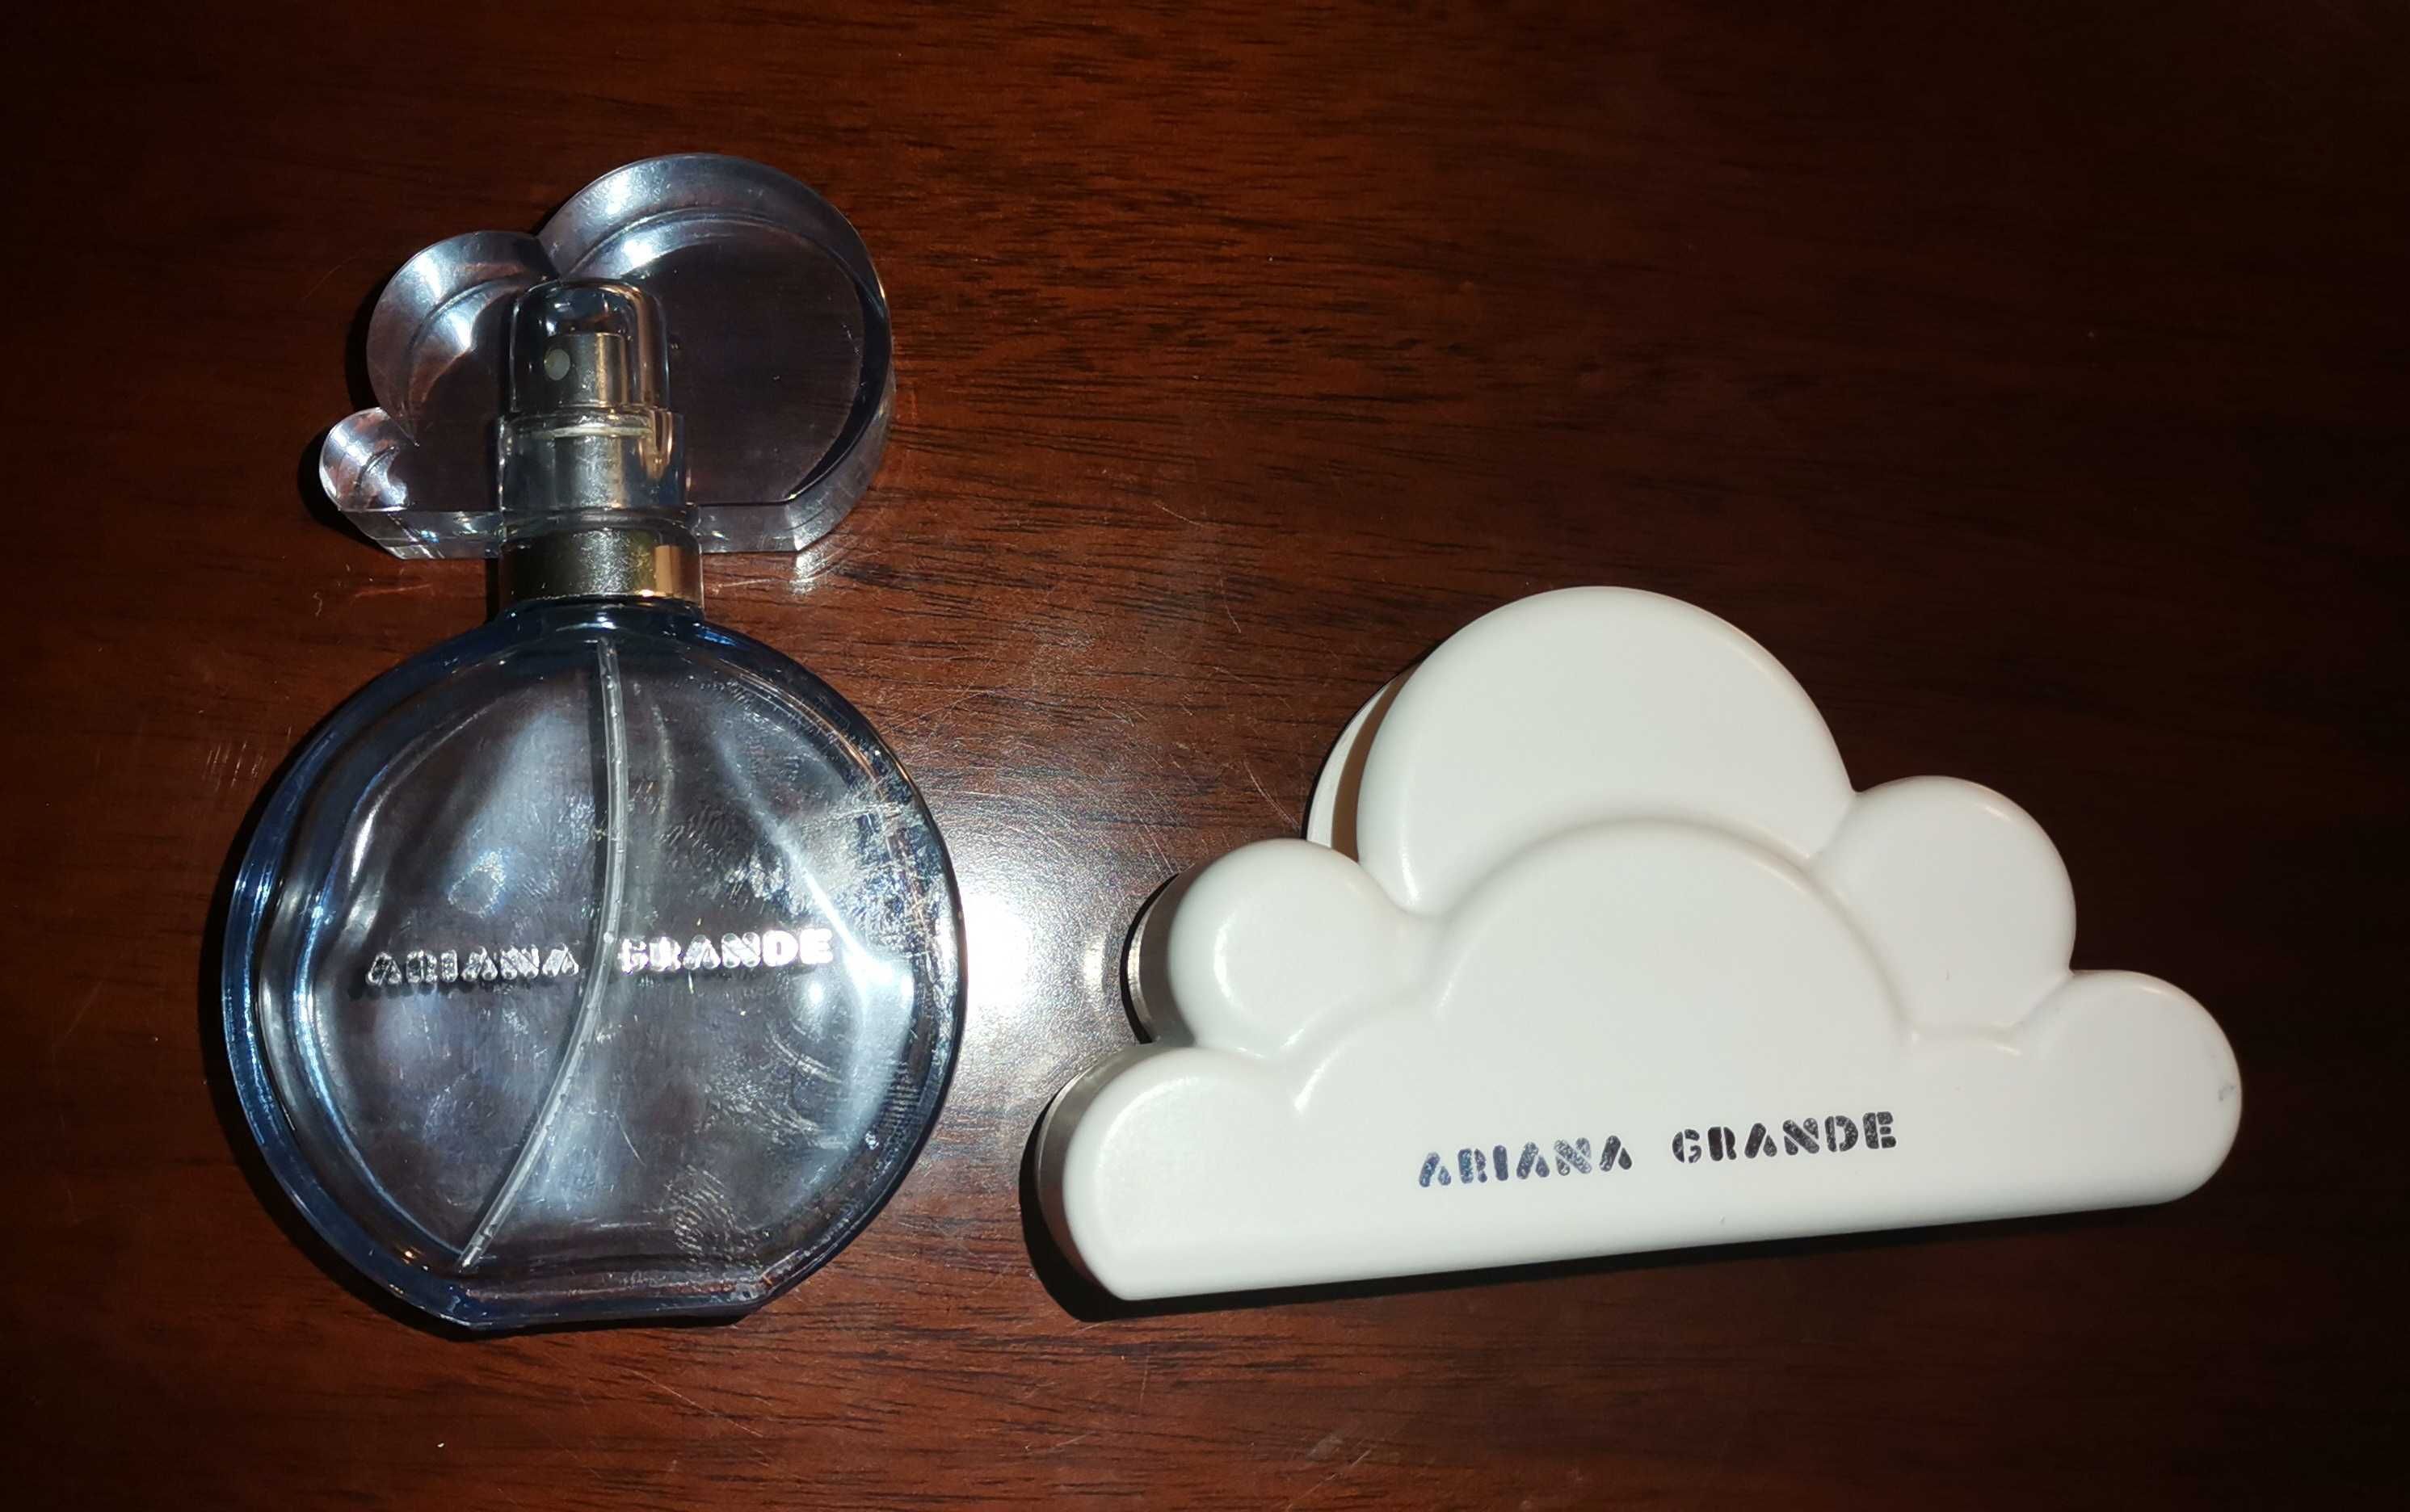 Sprzedam opakowanie perfum Ariana Grande Claude